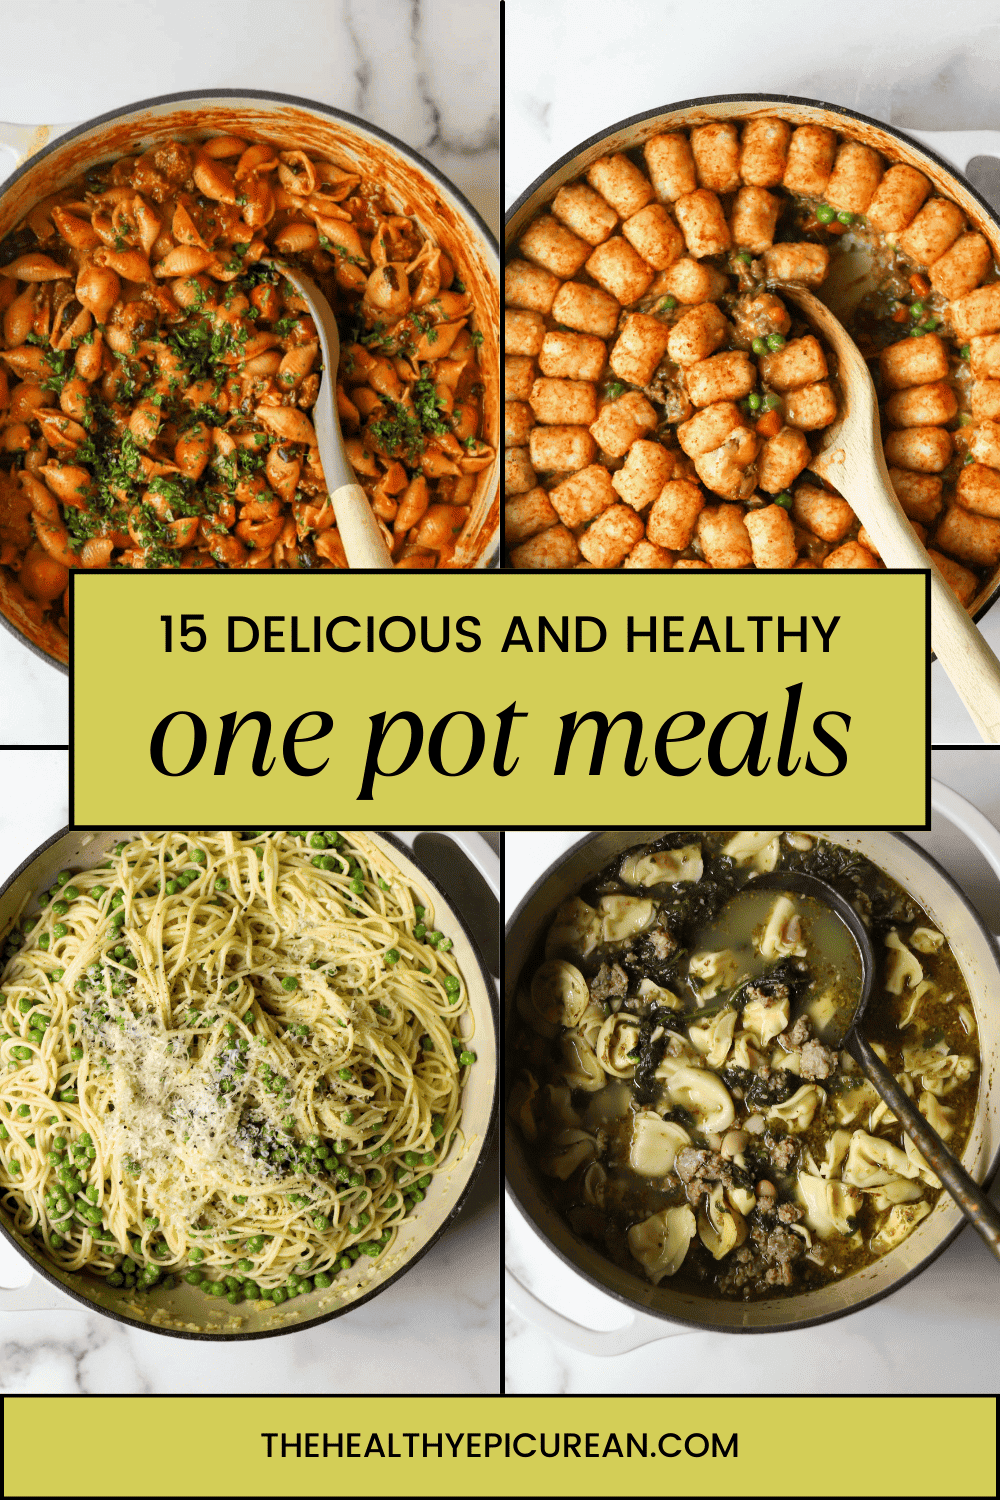 Healthy One Pot Meals - The Healthy Epicurean